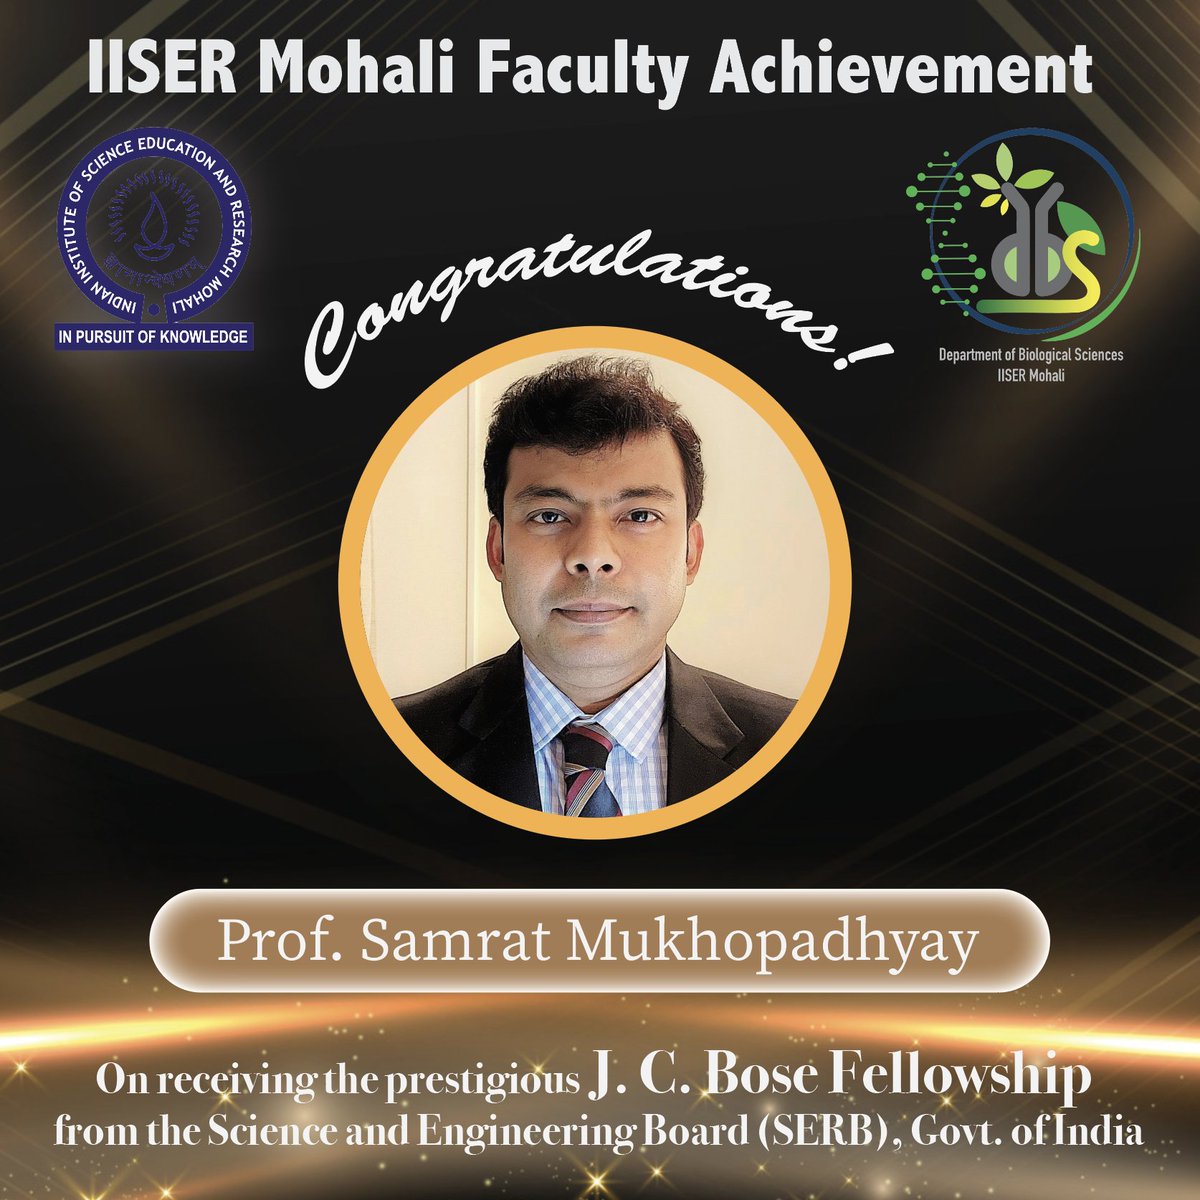 Congratulations to Prof. Samrat Mukhopadhyay, Department of Biological Sciences, IISER Mohali, on receiving the prestigious J. C. Bose Fellowship! @SamratLabMohali @IiserMohali